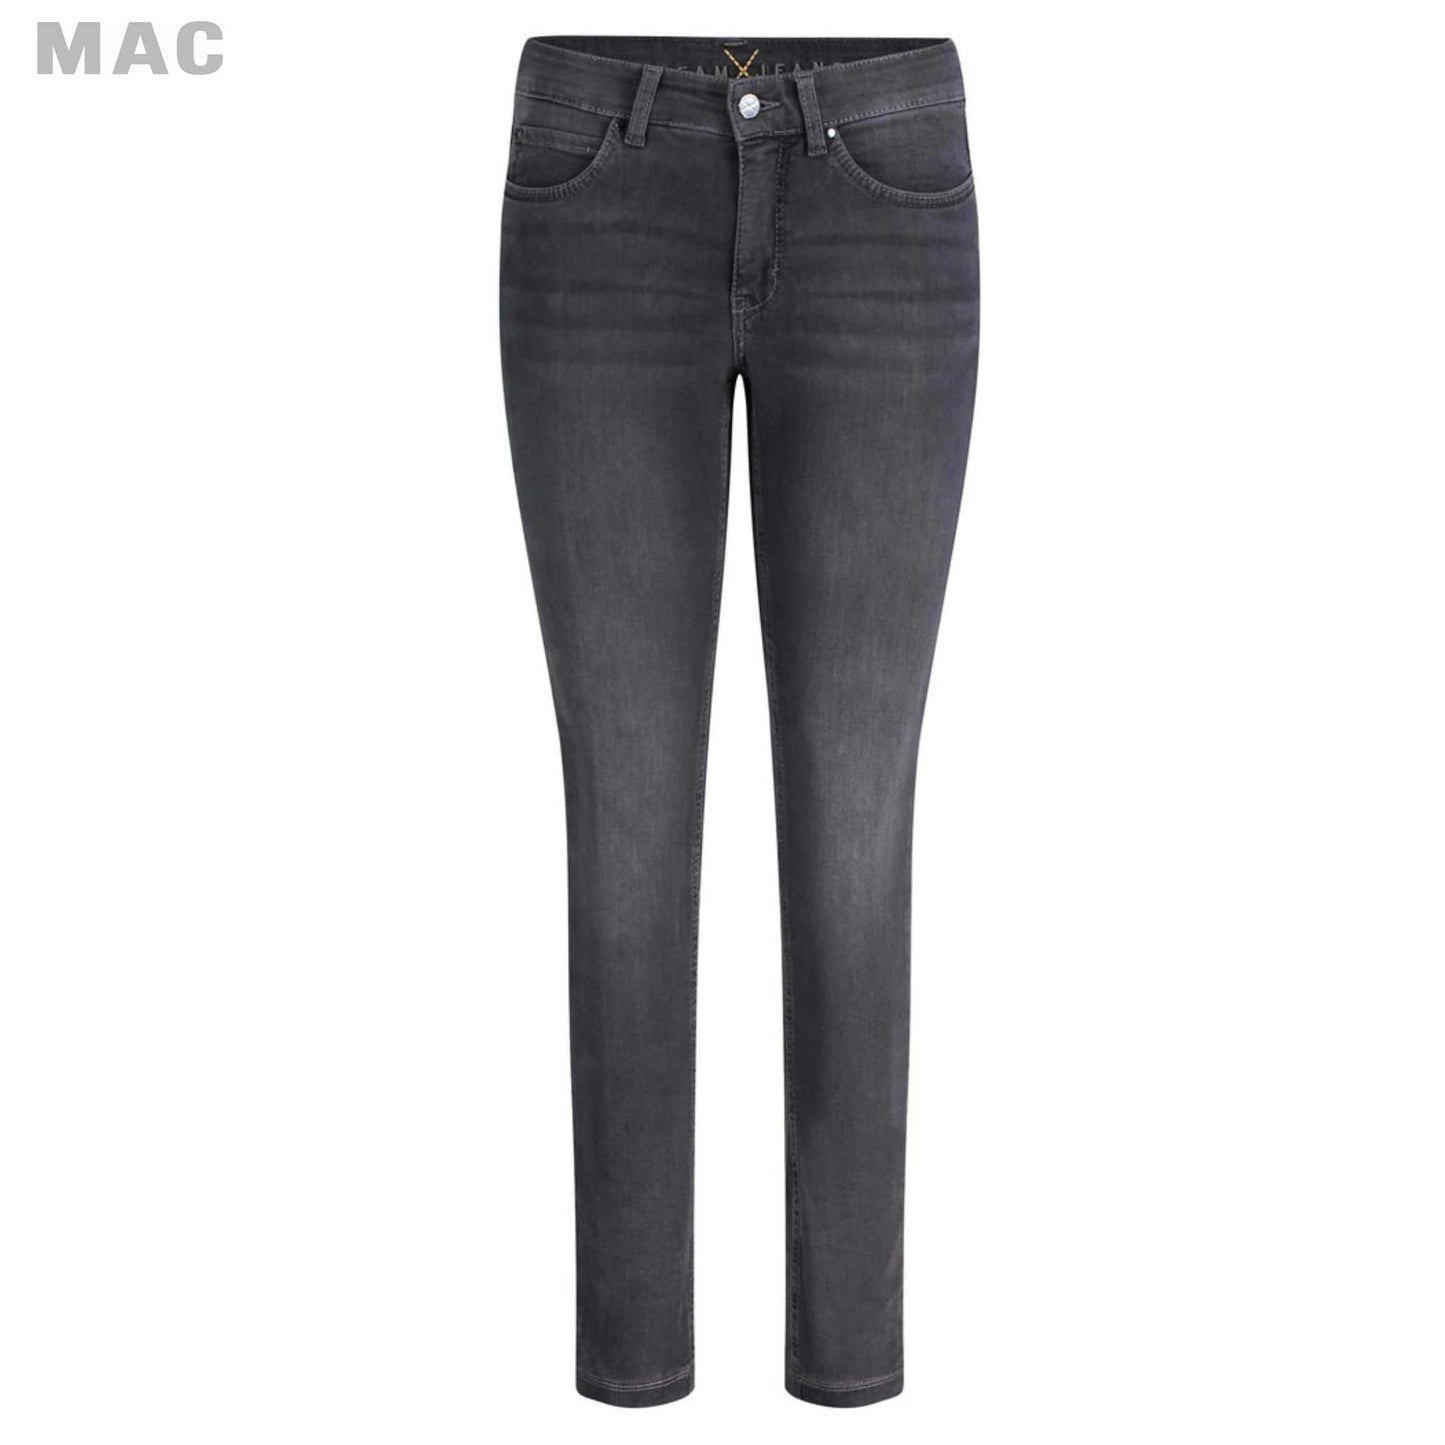 clothing tall women mac jeans dream skinny auth gray